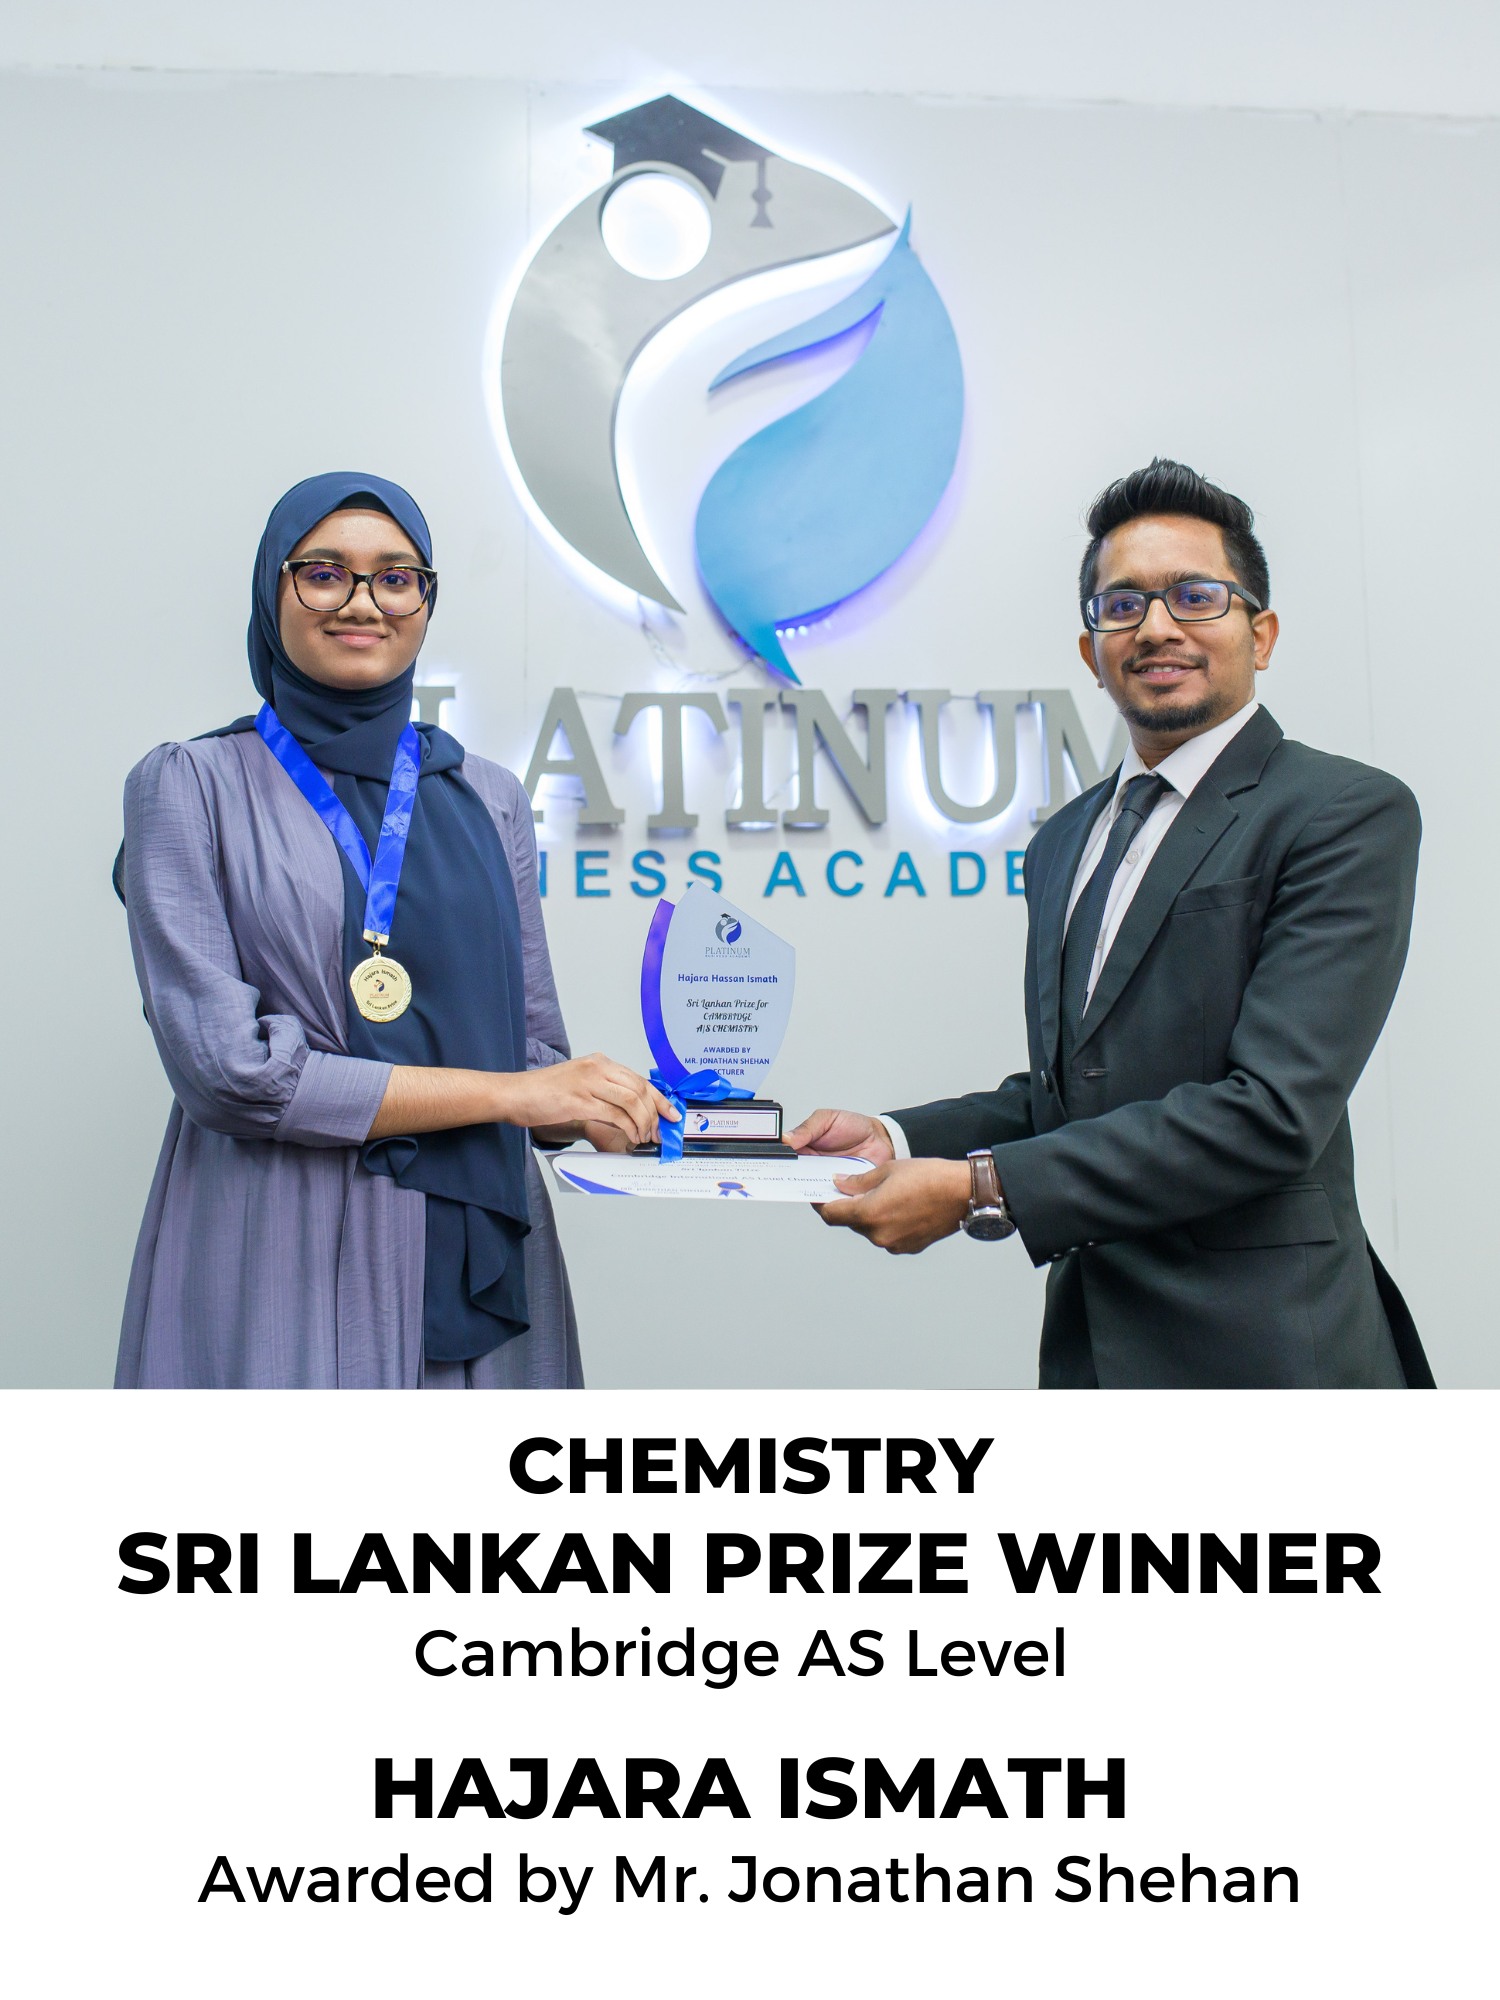 Cambridge AS Level Chemistry Sri Lankan Prize Winner: Hajara Ismath
Lecturer: Mr. Jonathan Shehan